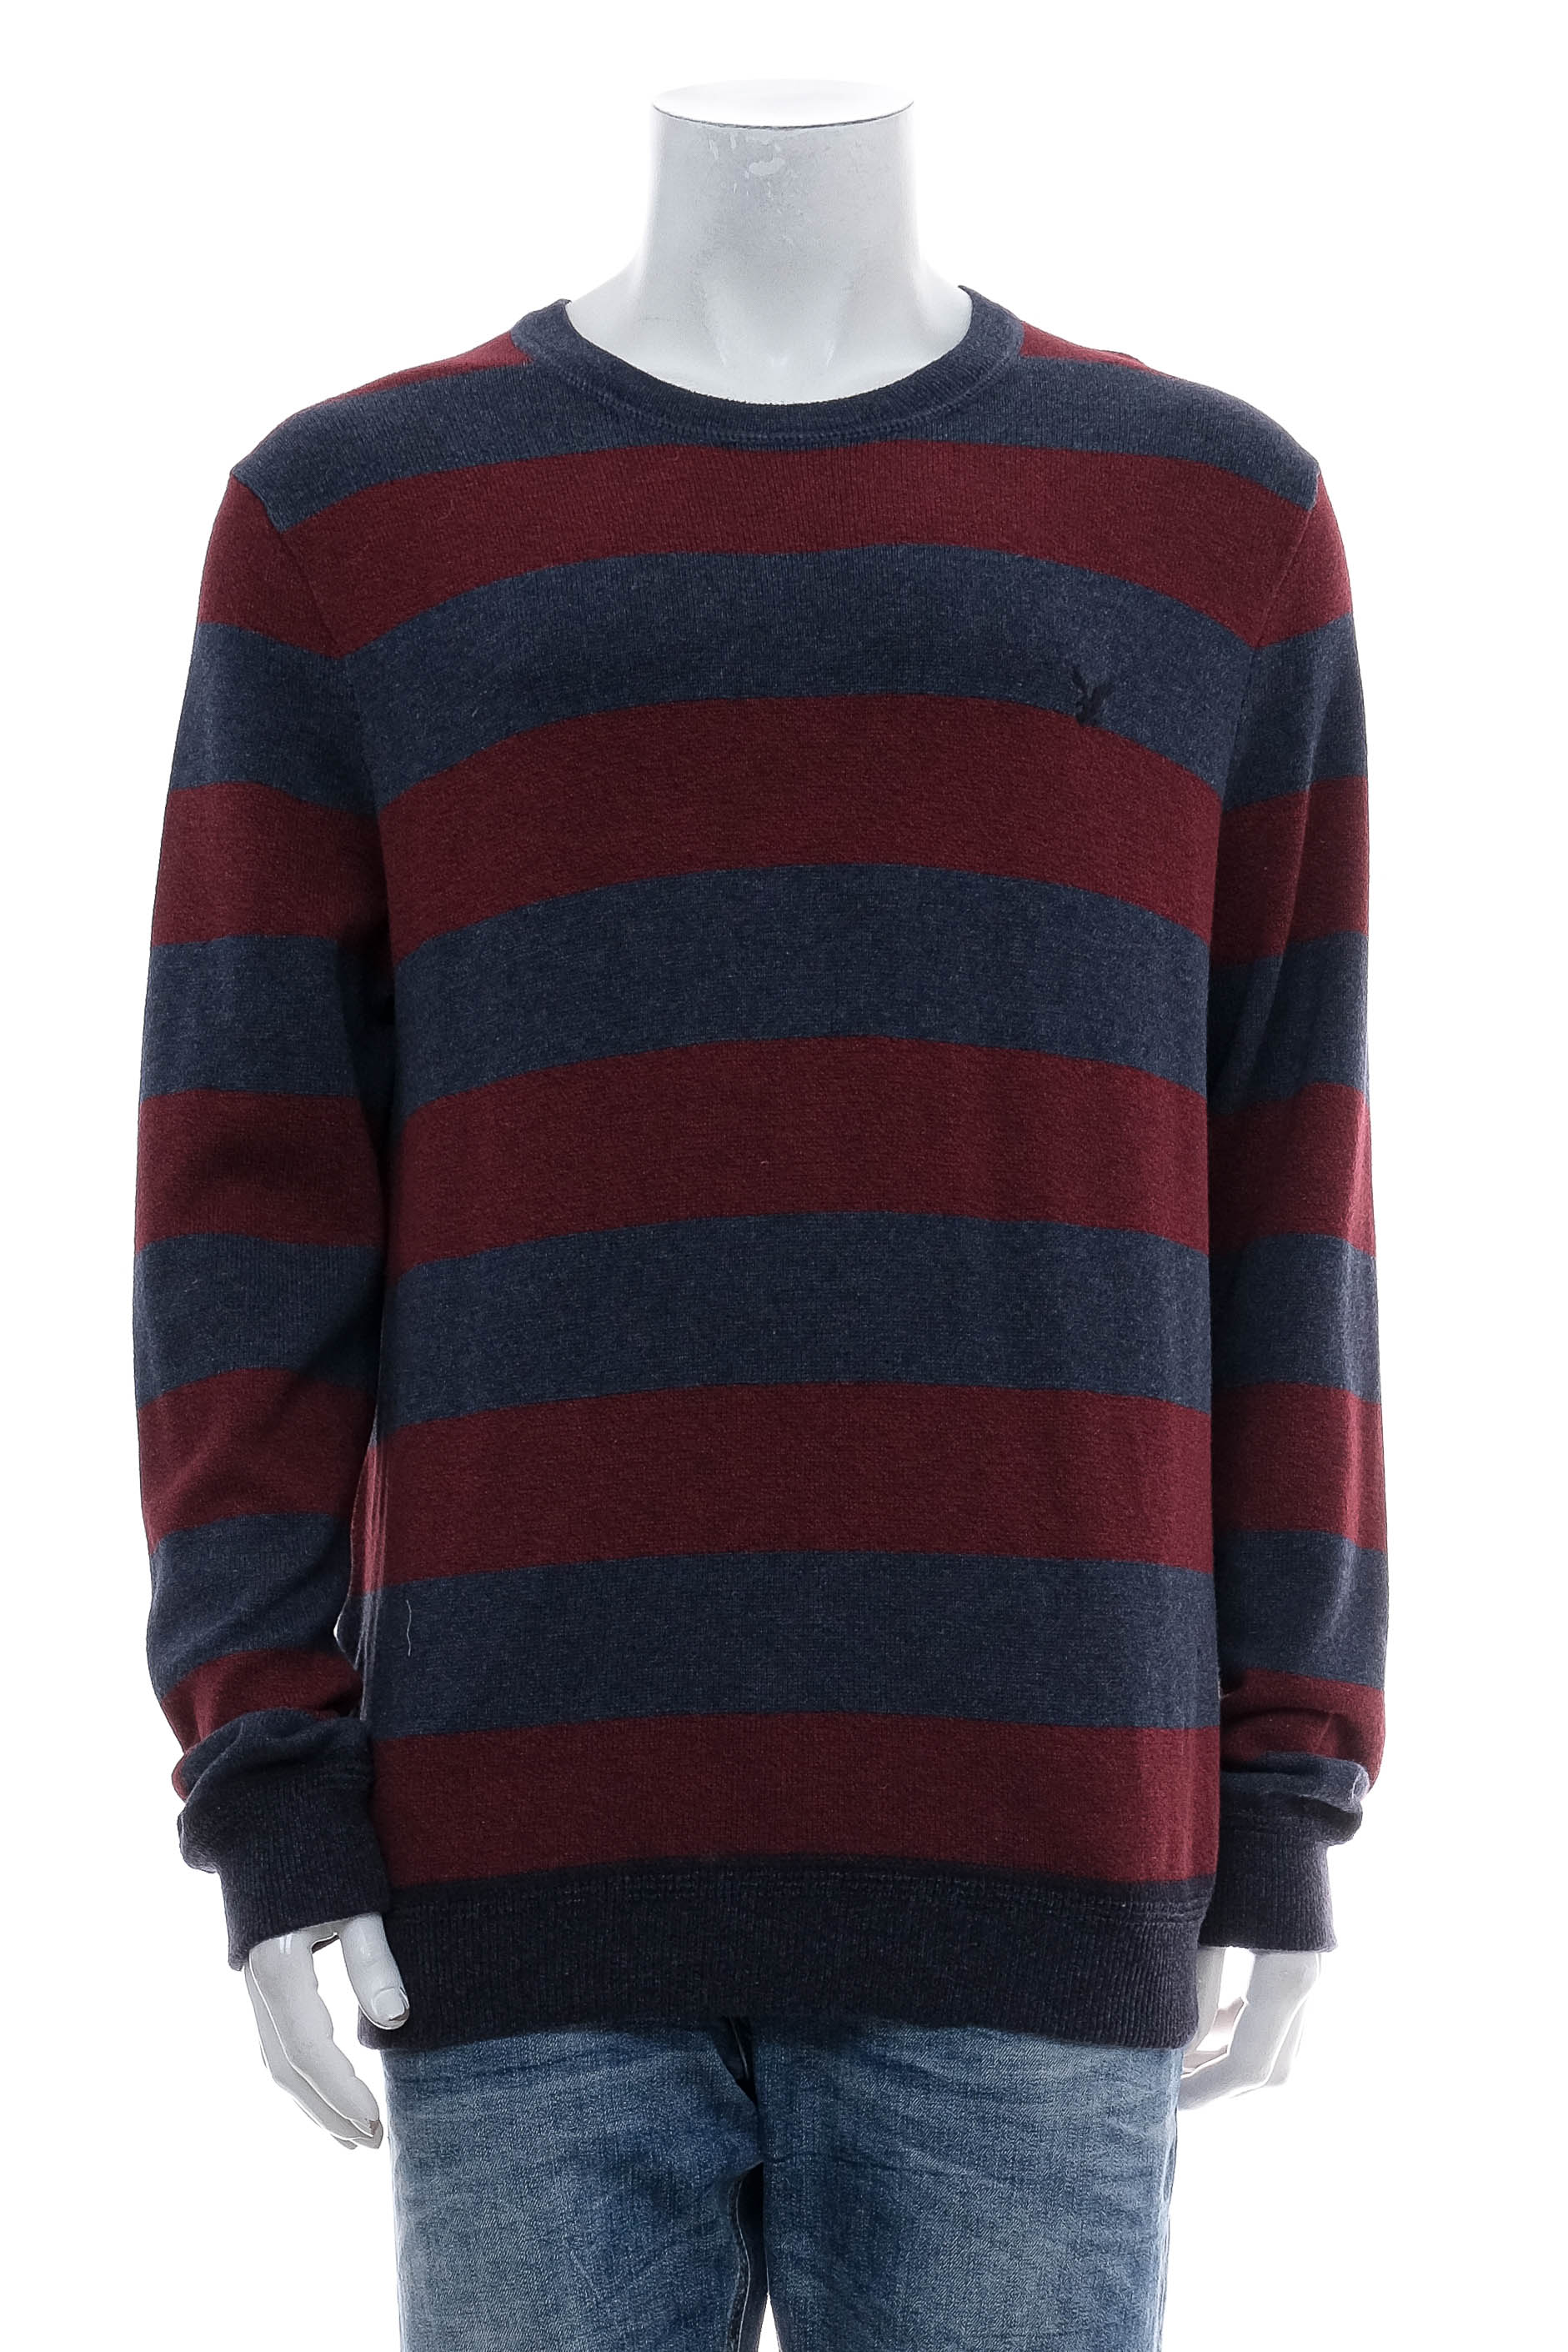 Men's sweater - American Eagle - 0